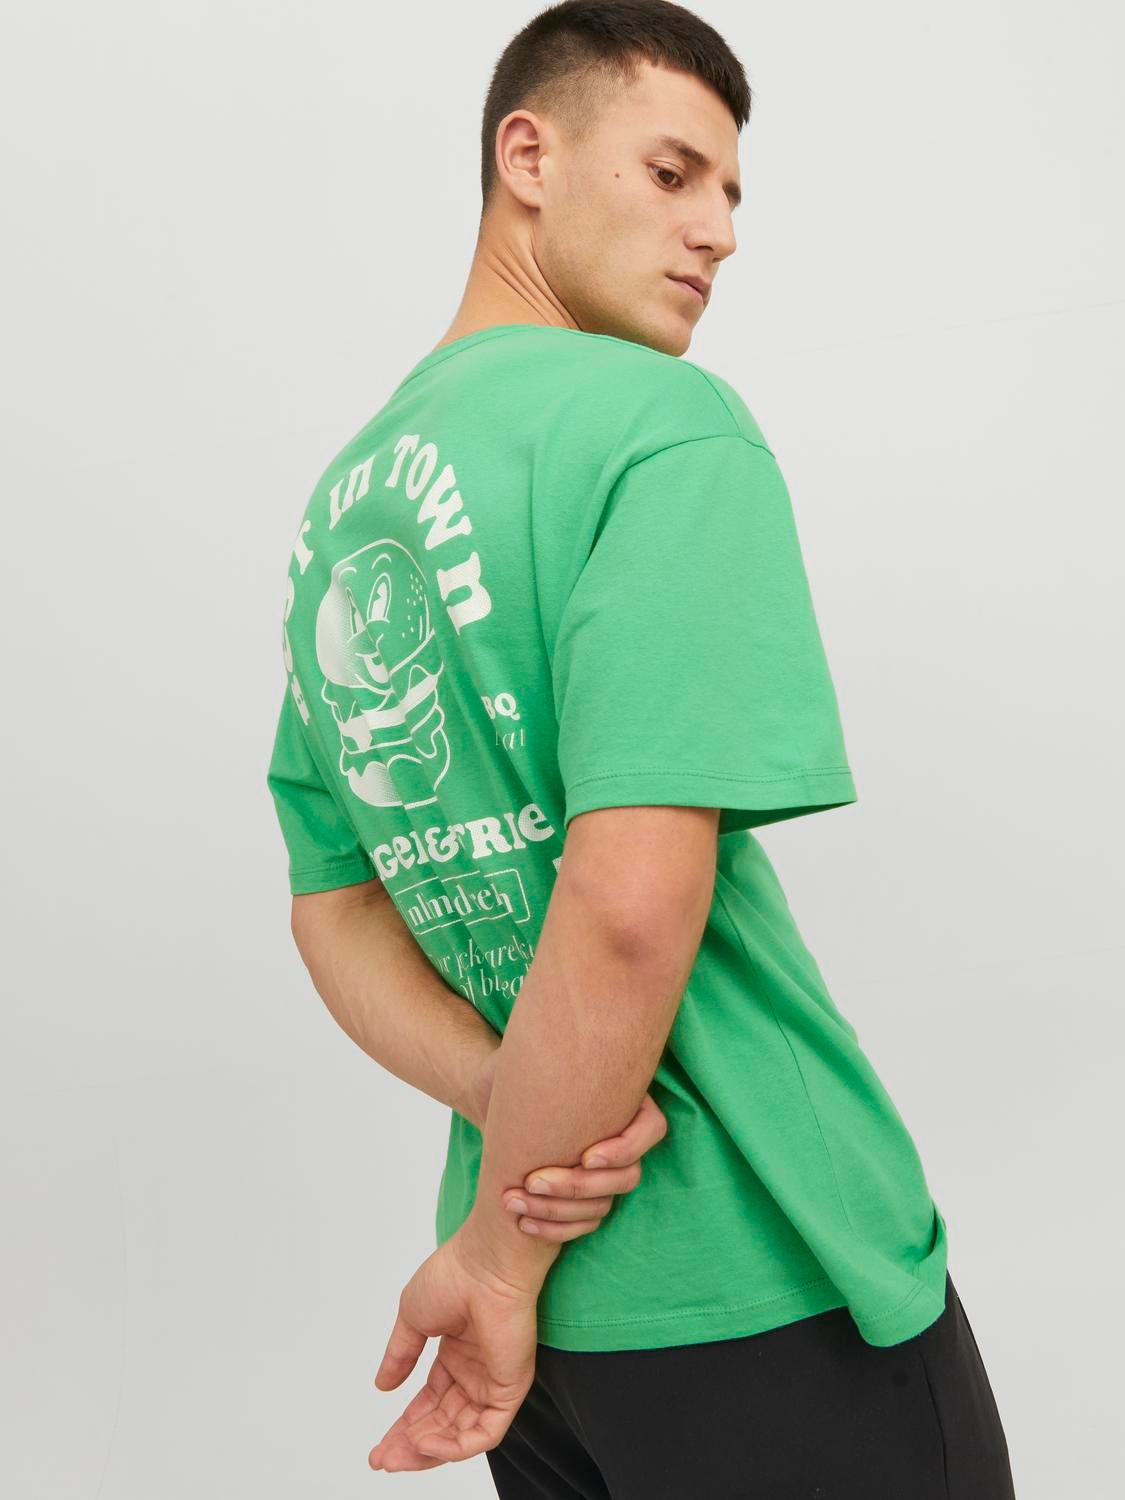 Jack & Jones Gedruckt Rundhals T-shirt -Island Green - 12245412